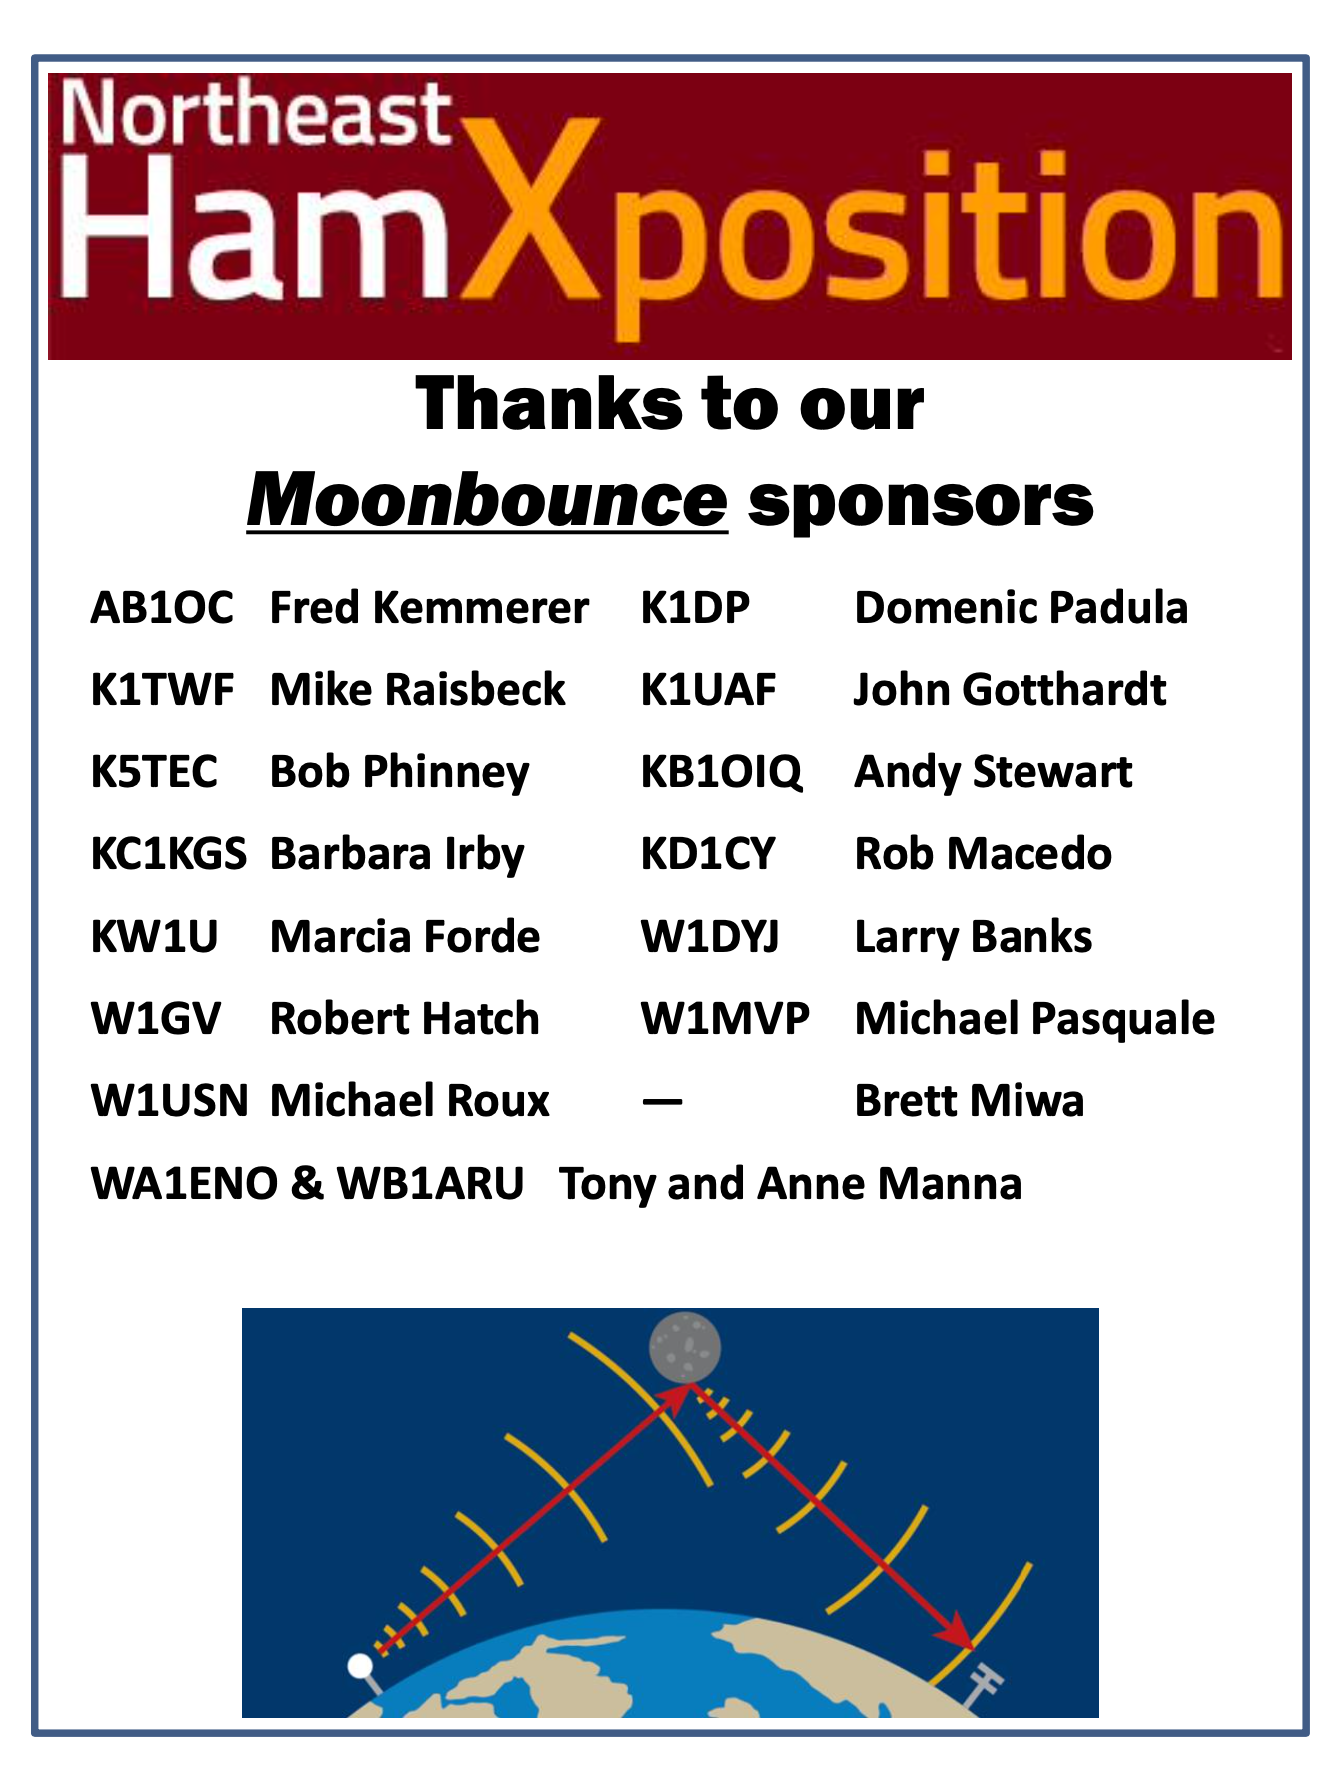 List of Moonbounce sponsors